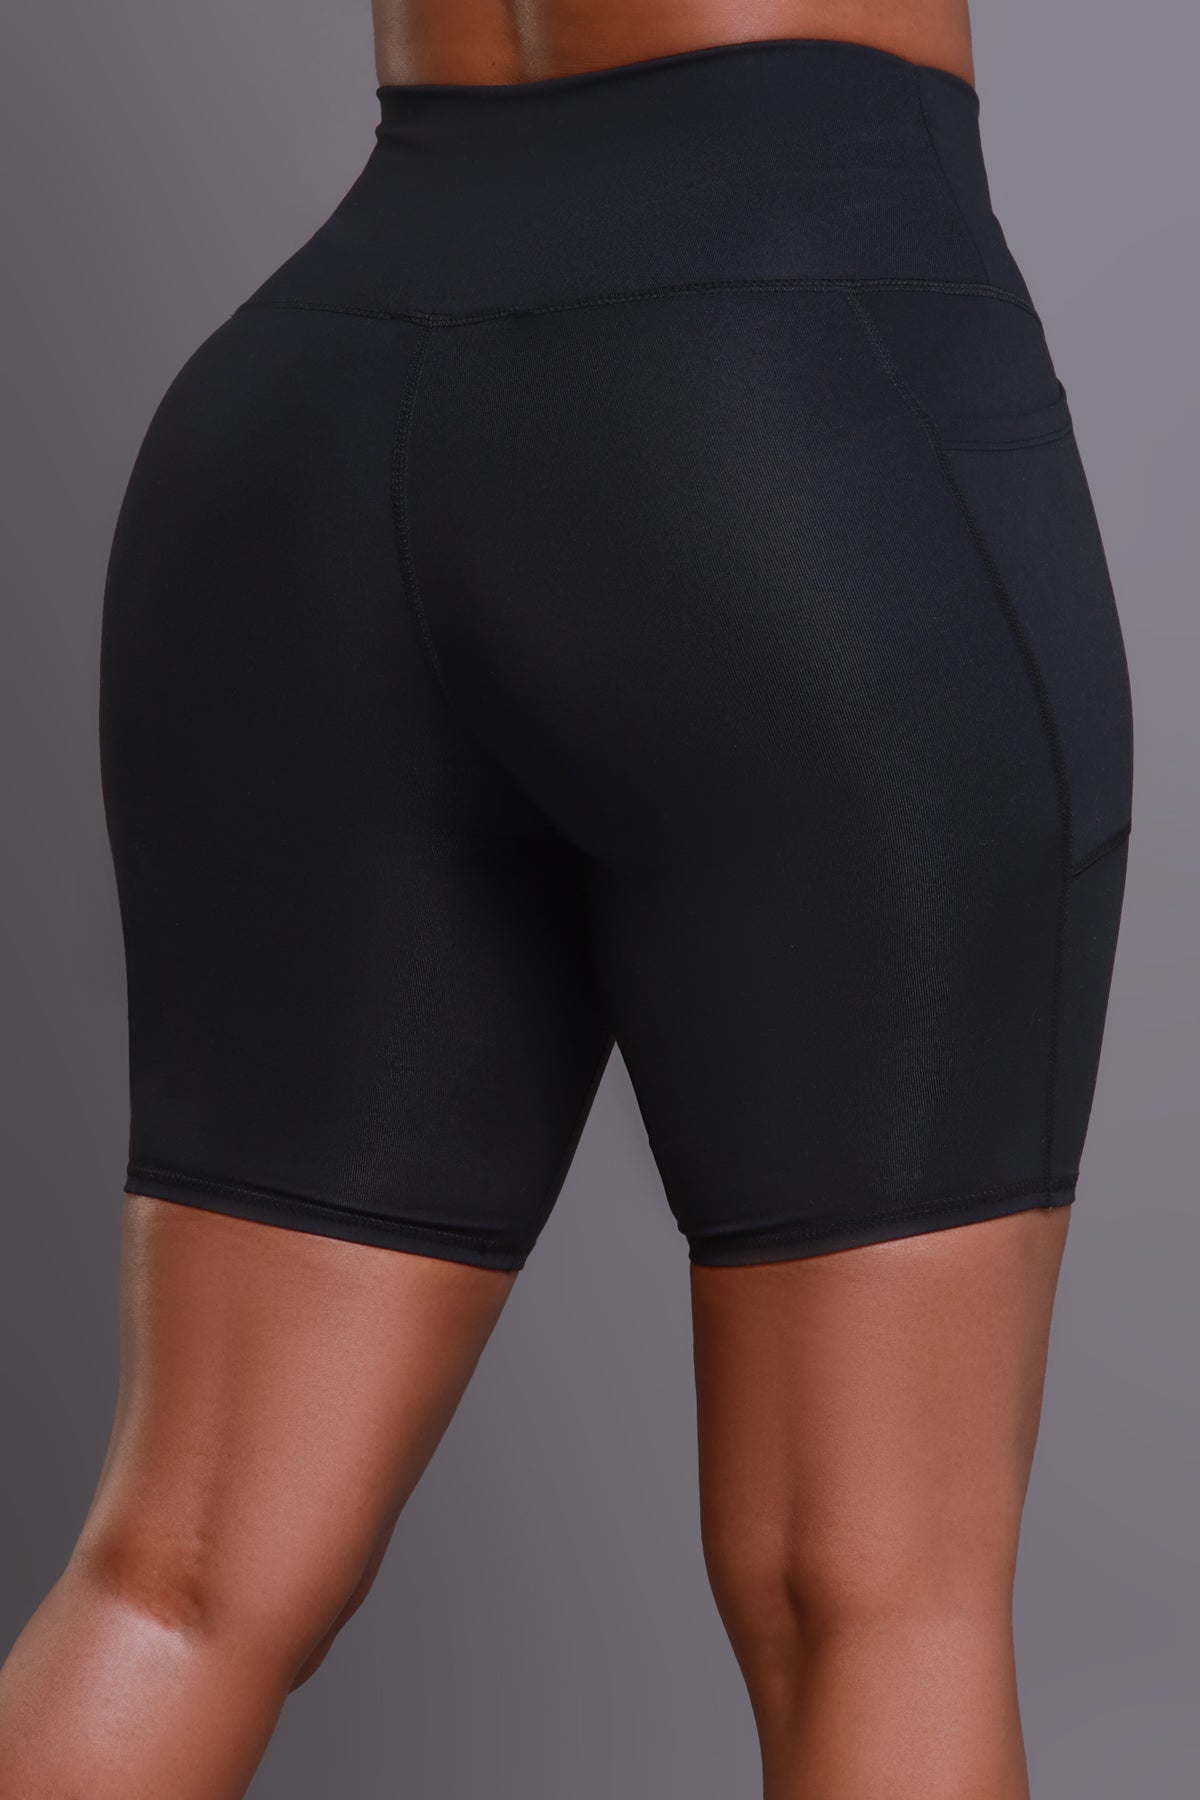 
              Hot Spot NUW Biker Shorts - Black - Swank A Posh
            